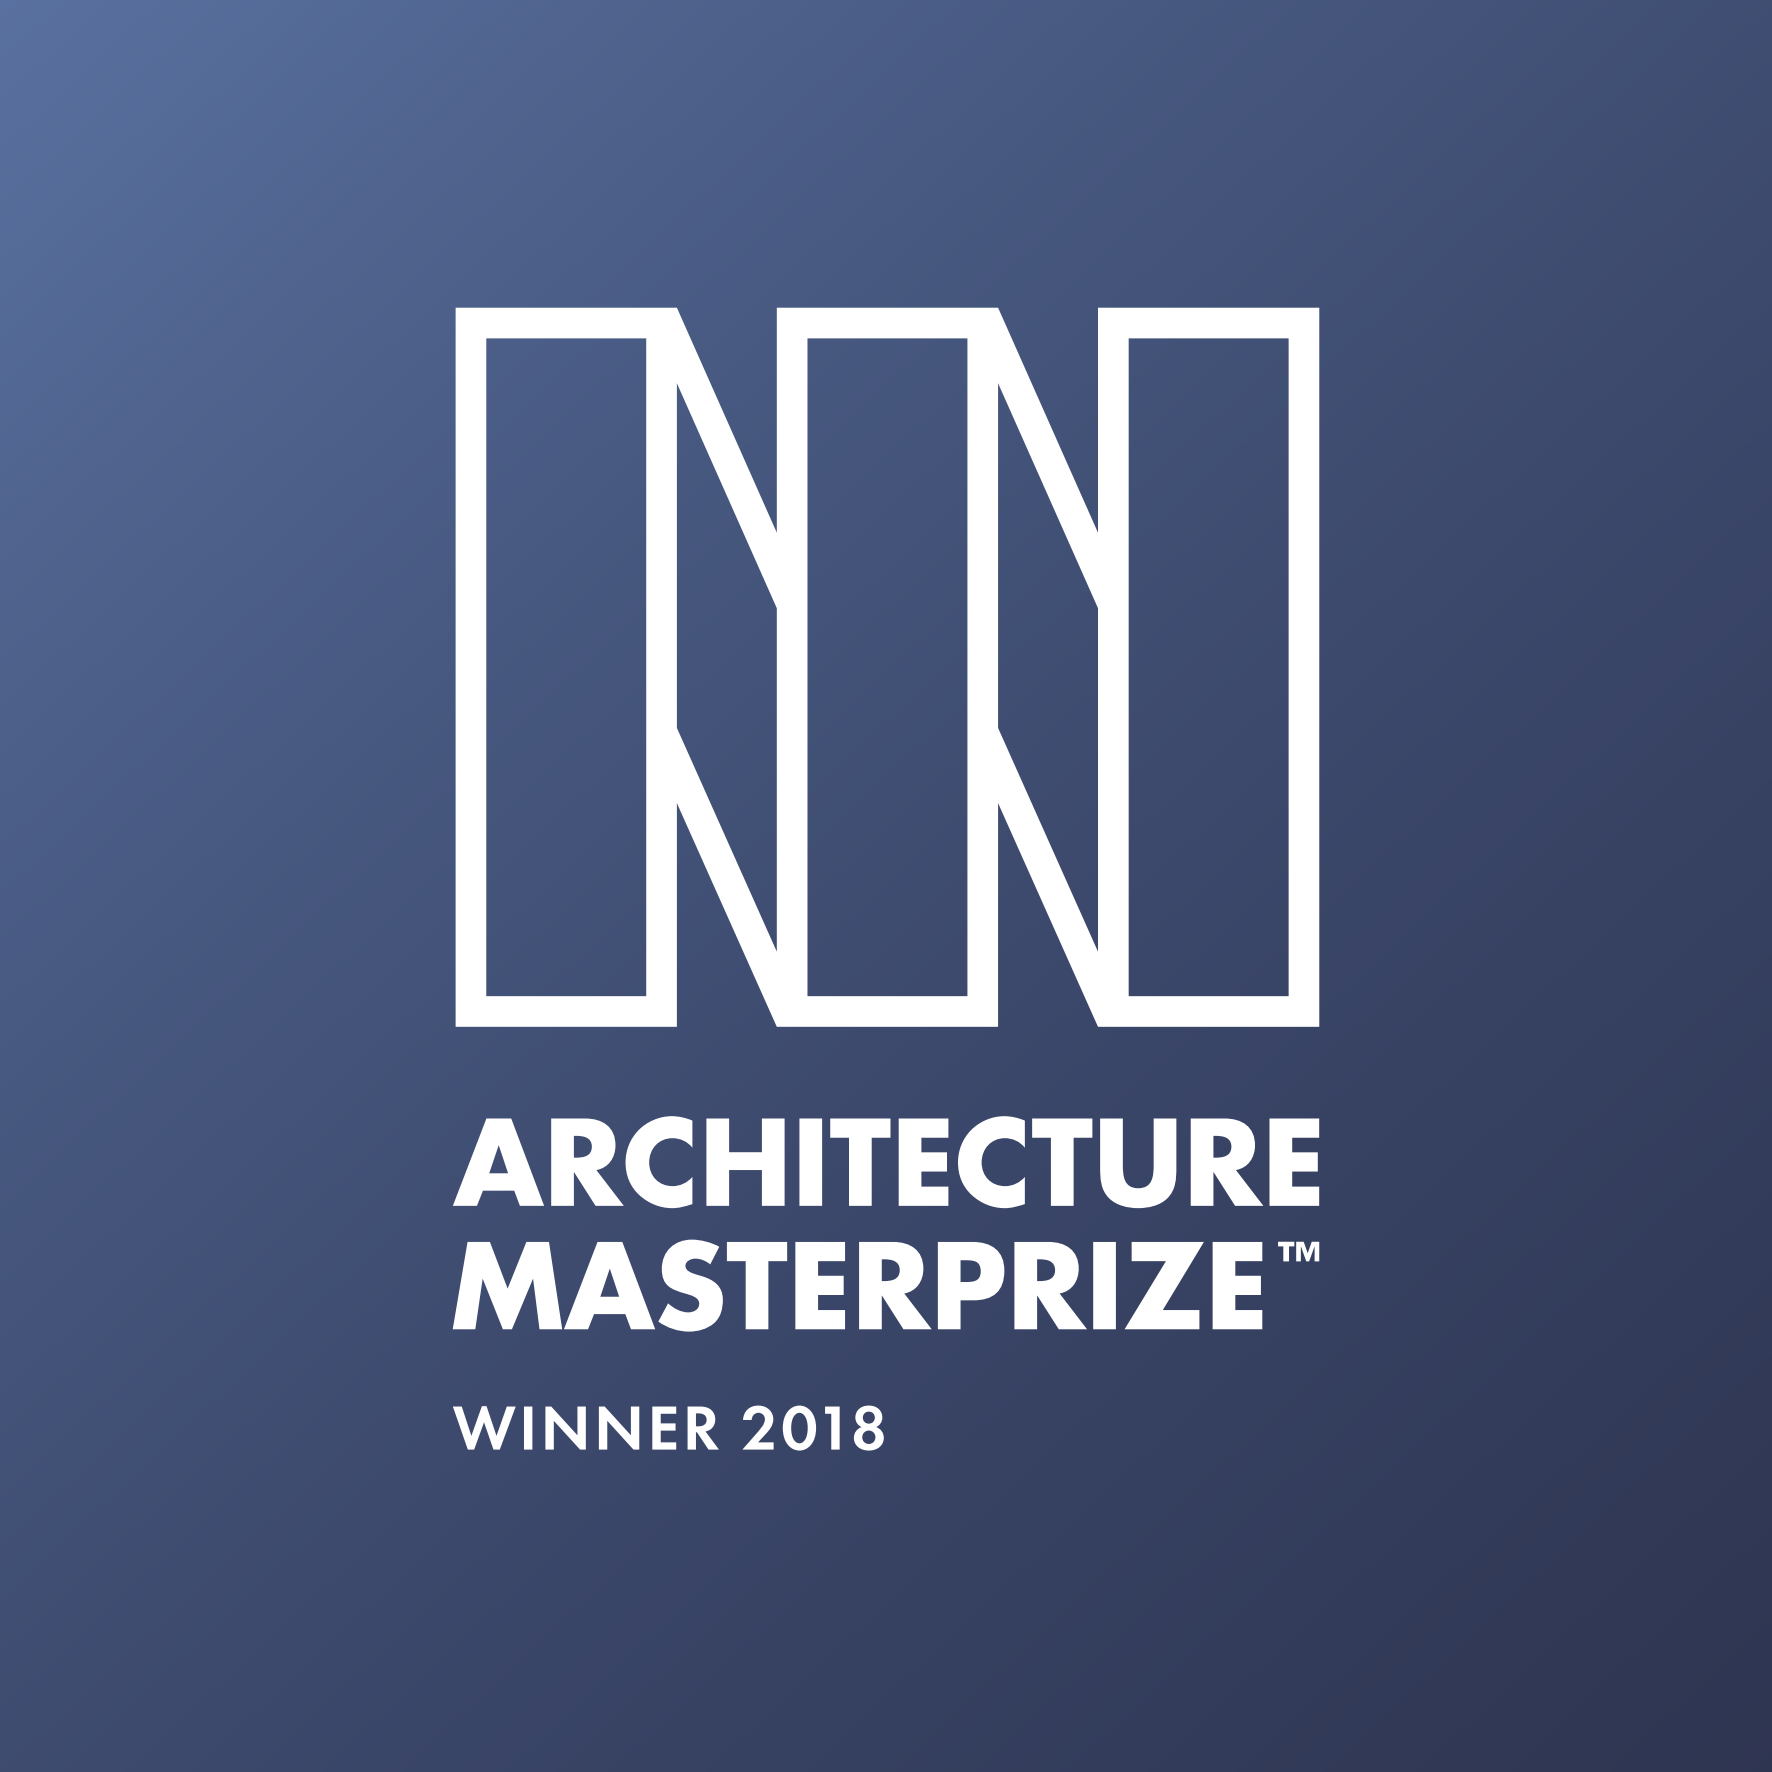 West-line Studio won Architecture MasterPrize